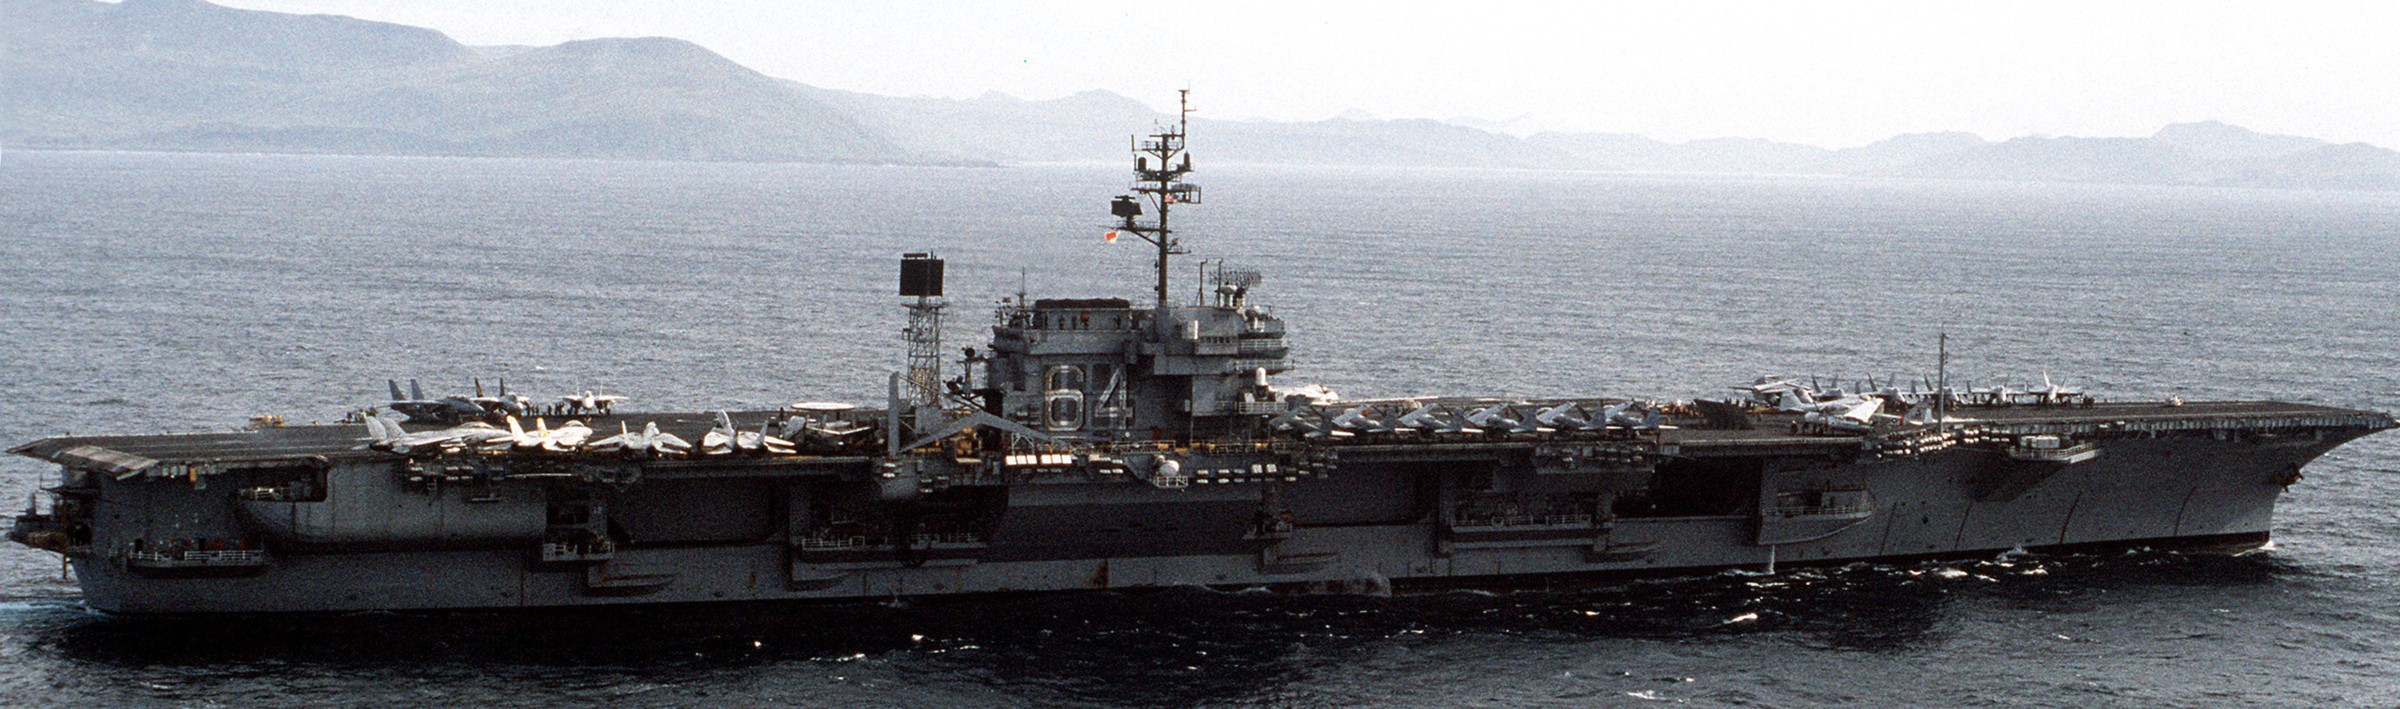 cv-64 uss constellation kitty hawk class aircraft carrier air wing cvw-14 us navy pacex 1989 105